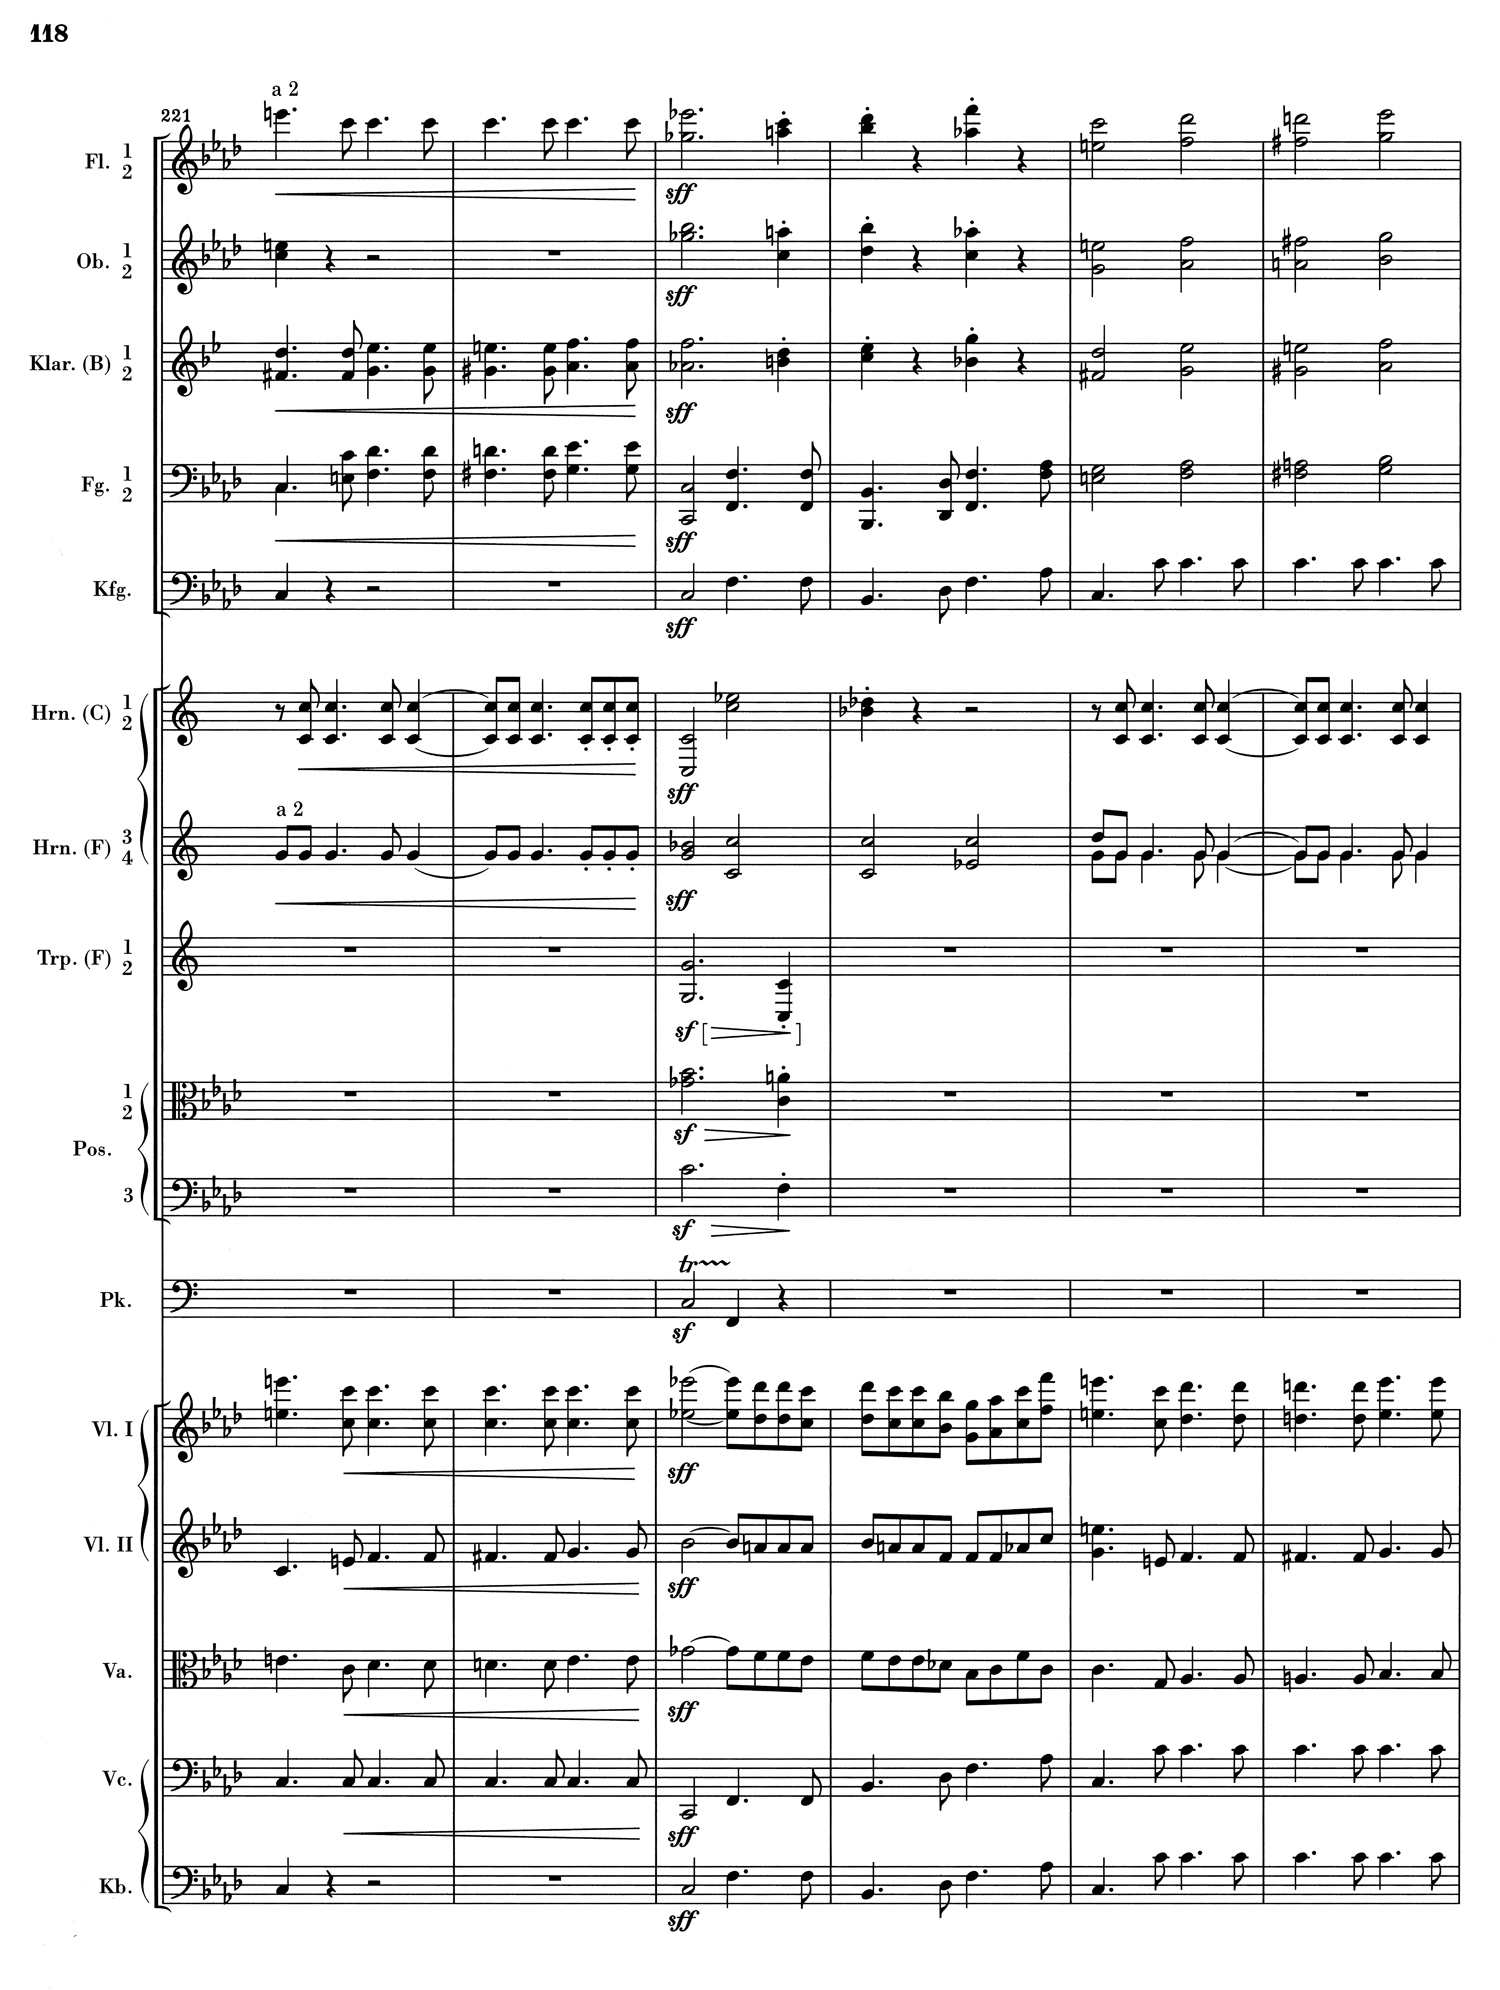 Brahms 3 Score 11.jpg